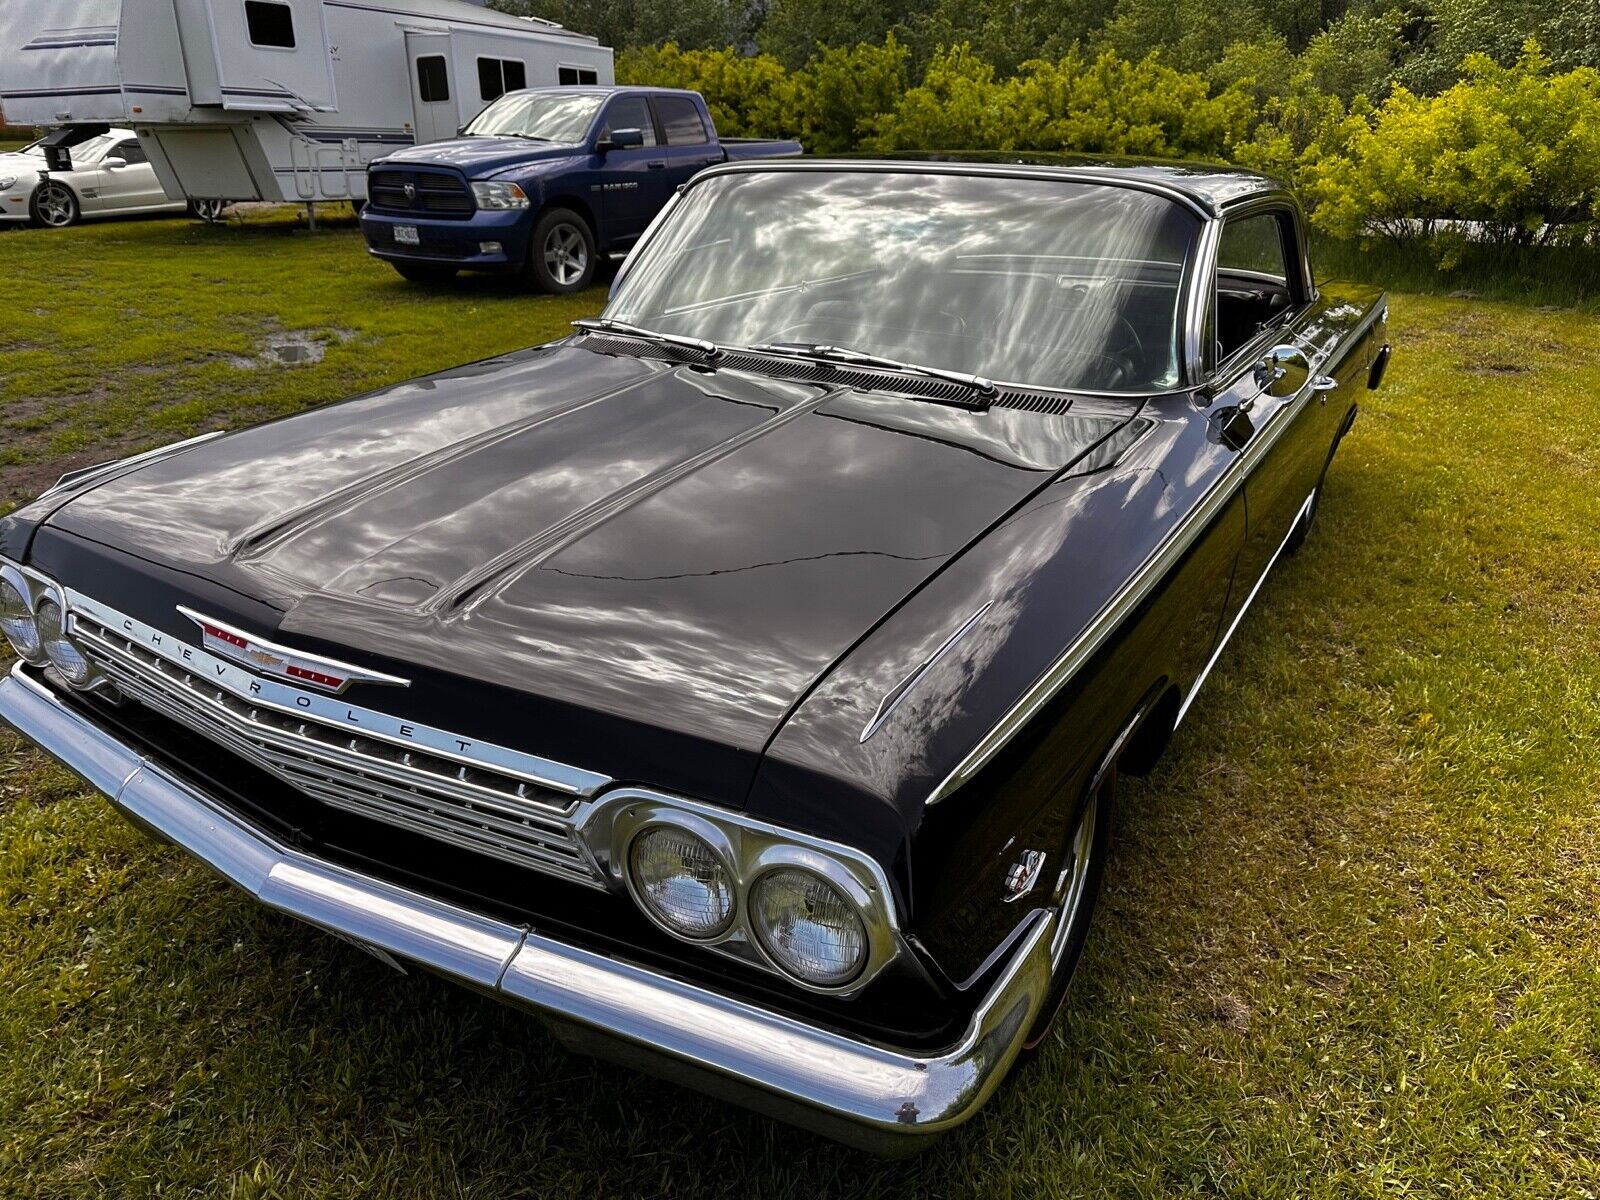 Rare Find: Restored 1962 Chevrolet Impala SS